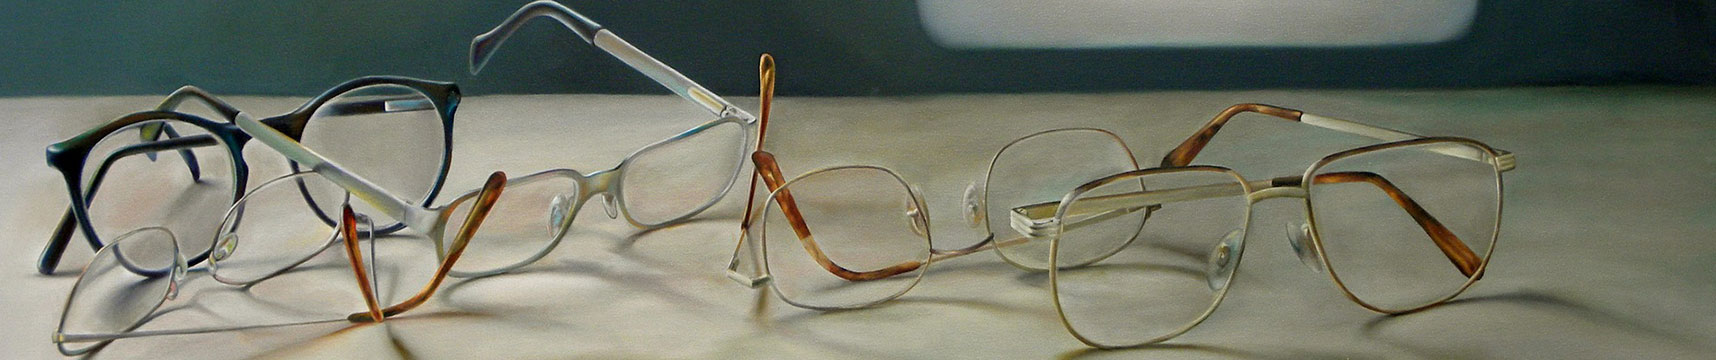 Focus Optic Simeria & Deva: lentile pentru ochelari: sticla, plastic, sticla organica